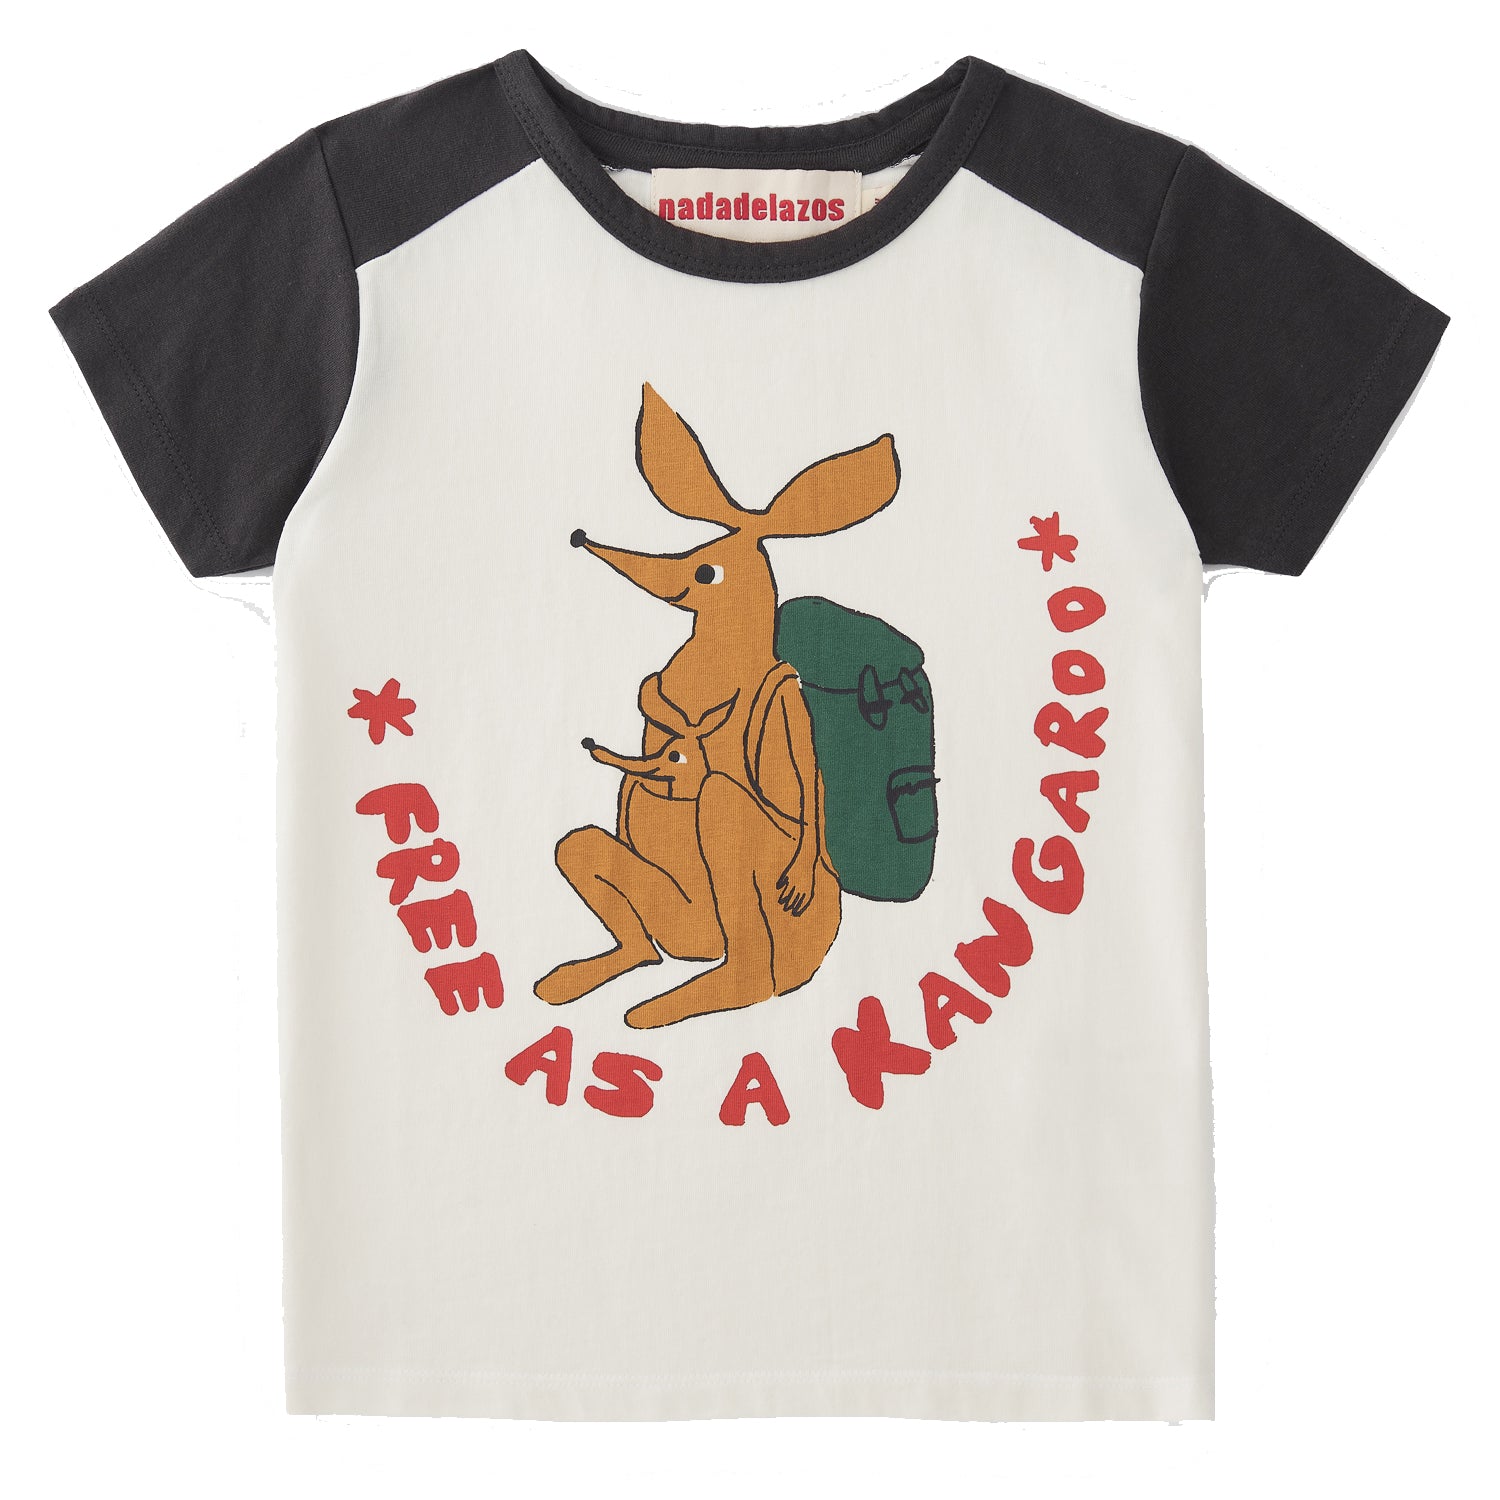 Free a & Nadadelazos – Kid Kangaroo The as Green T-Shirt Crib